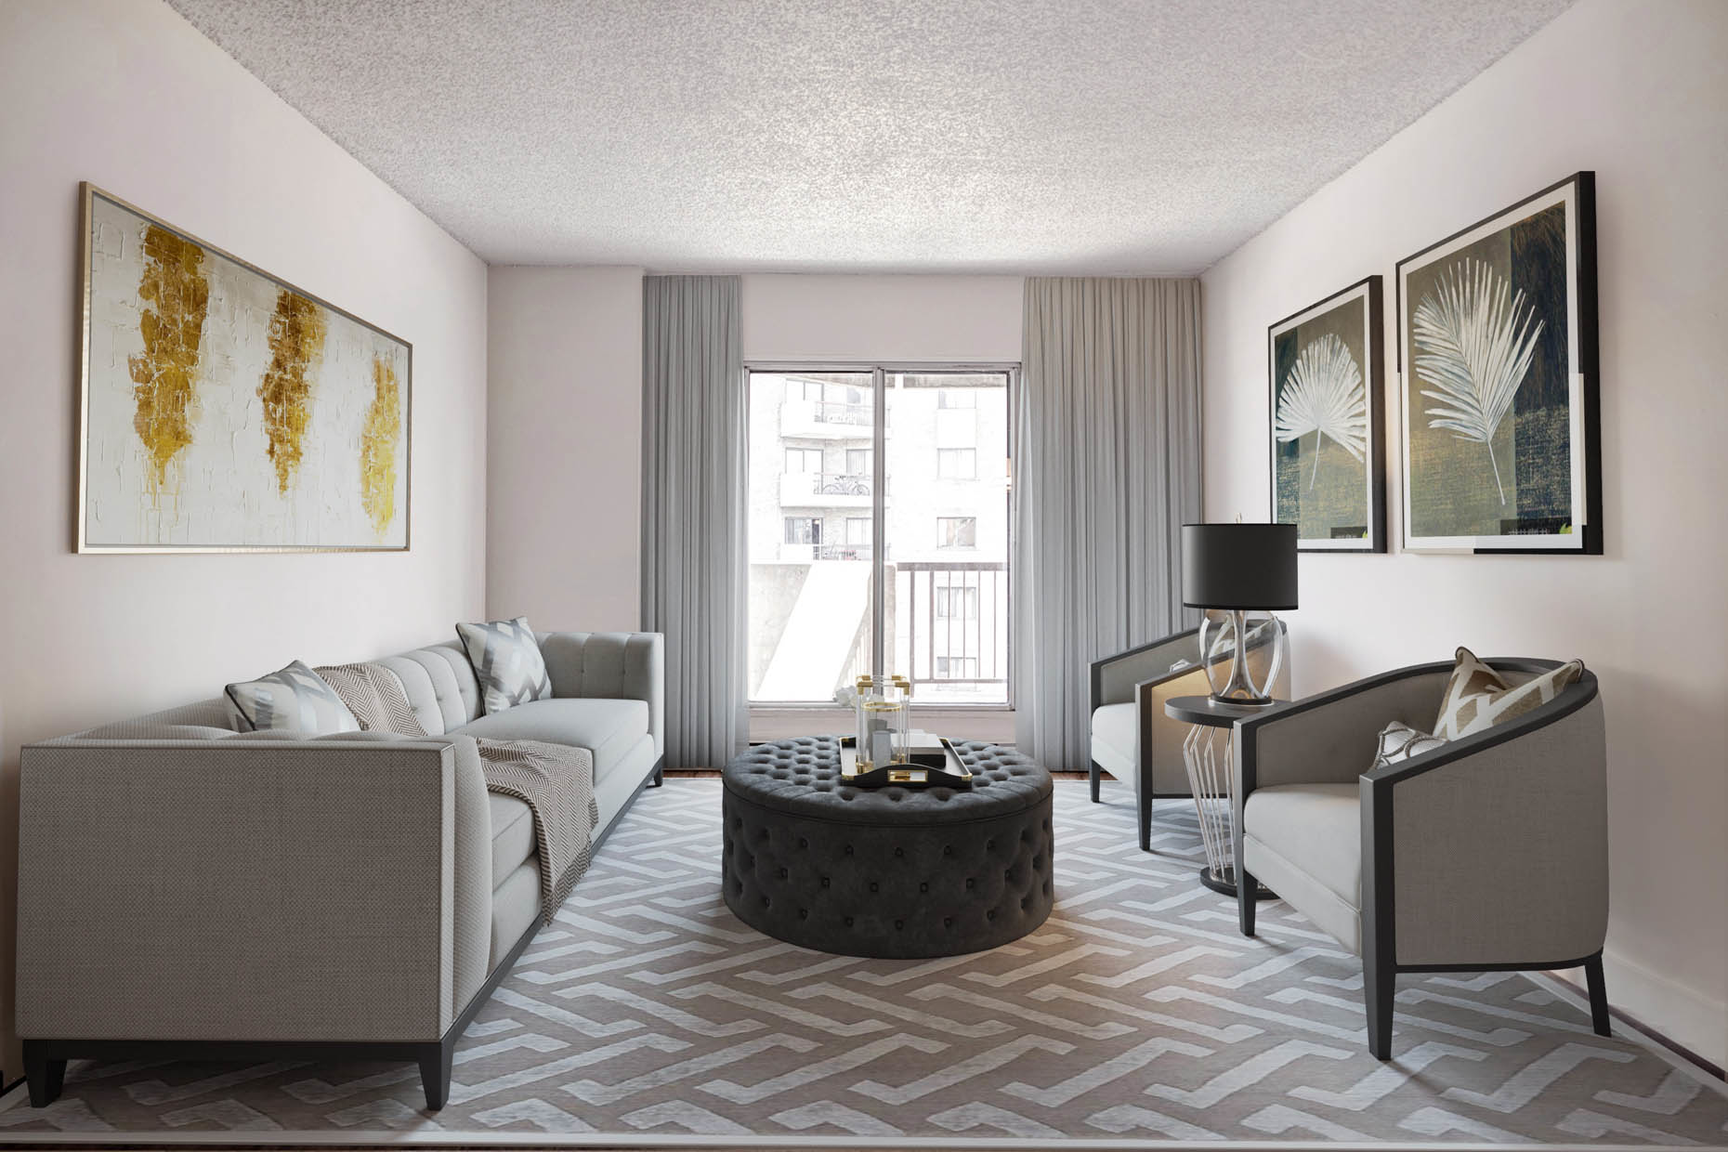 2 bedroom Apartments for rent in Ville St-Laurent - Bois-Franc at Complexe Deguire - Photo 02 - RentQuebecApartments – L417457